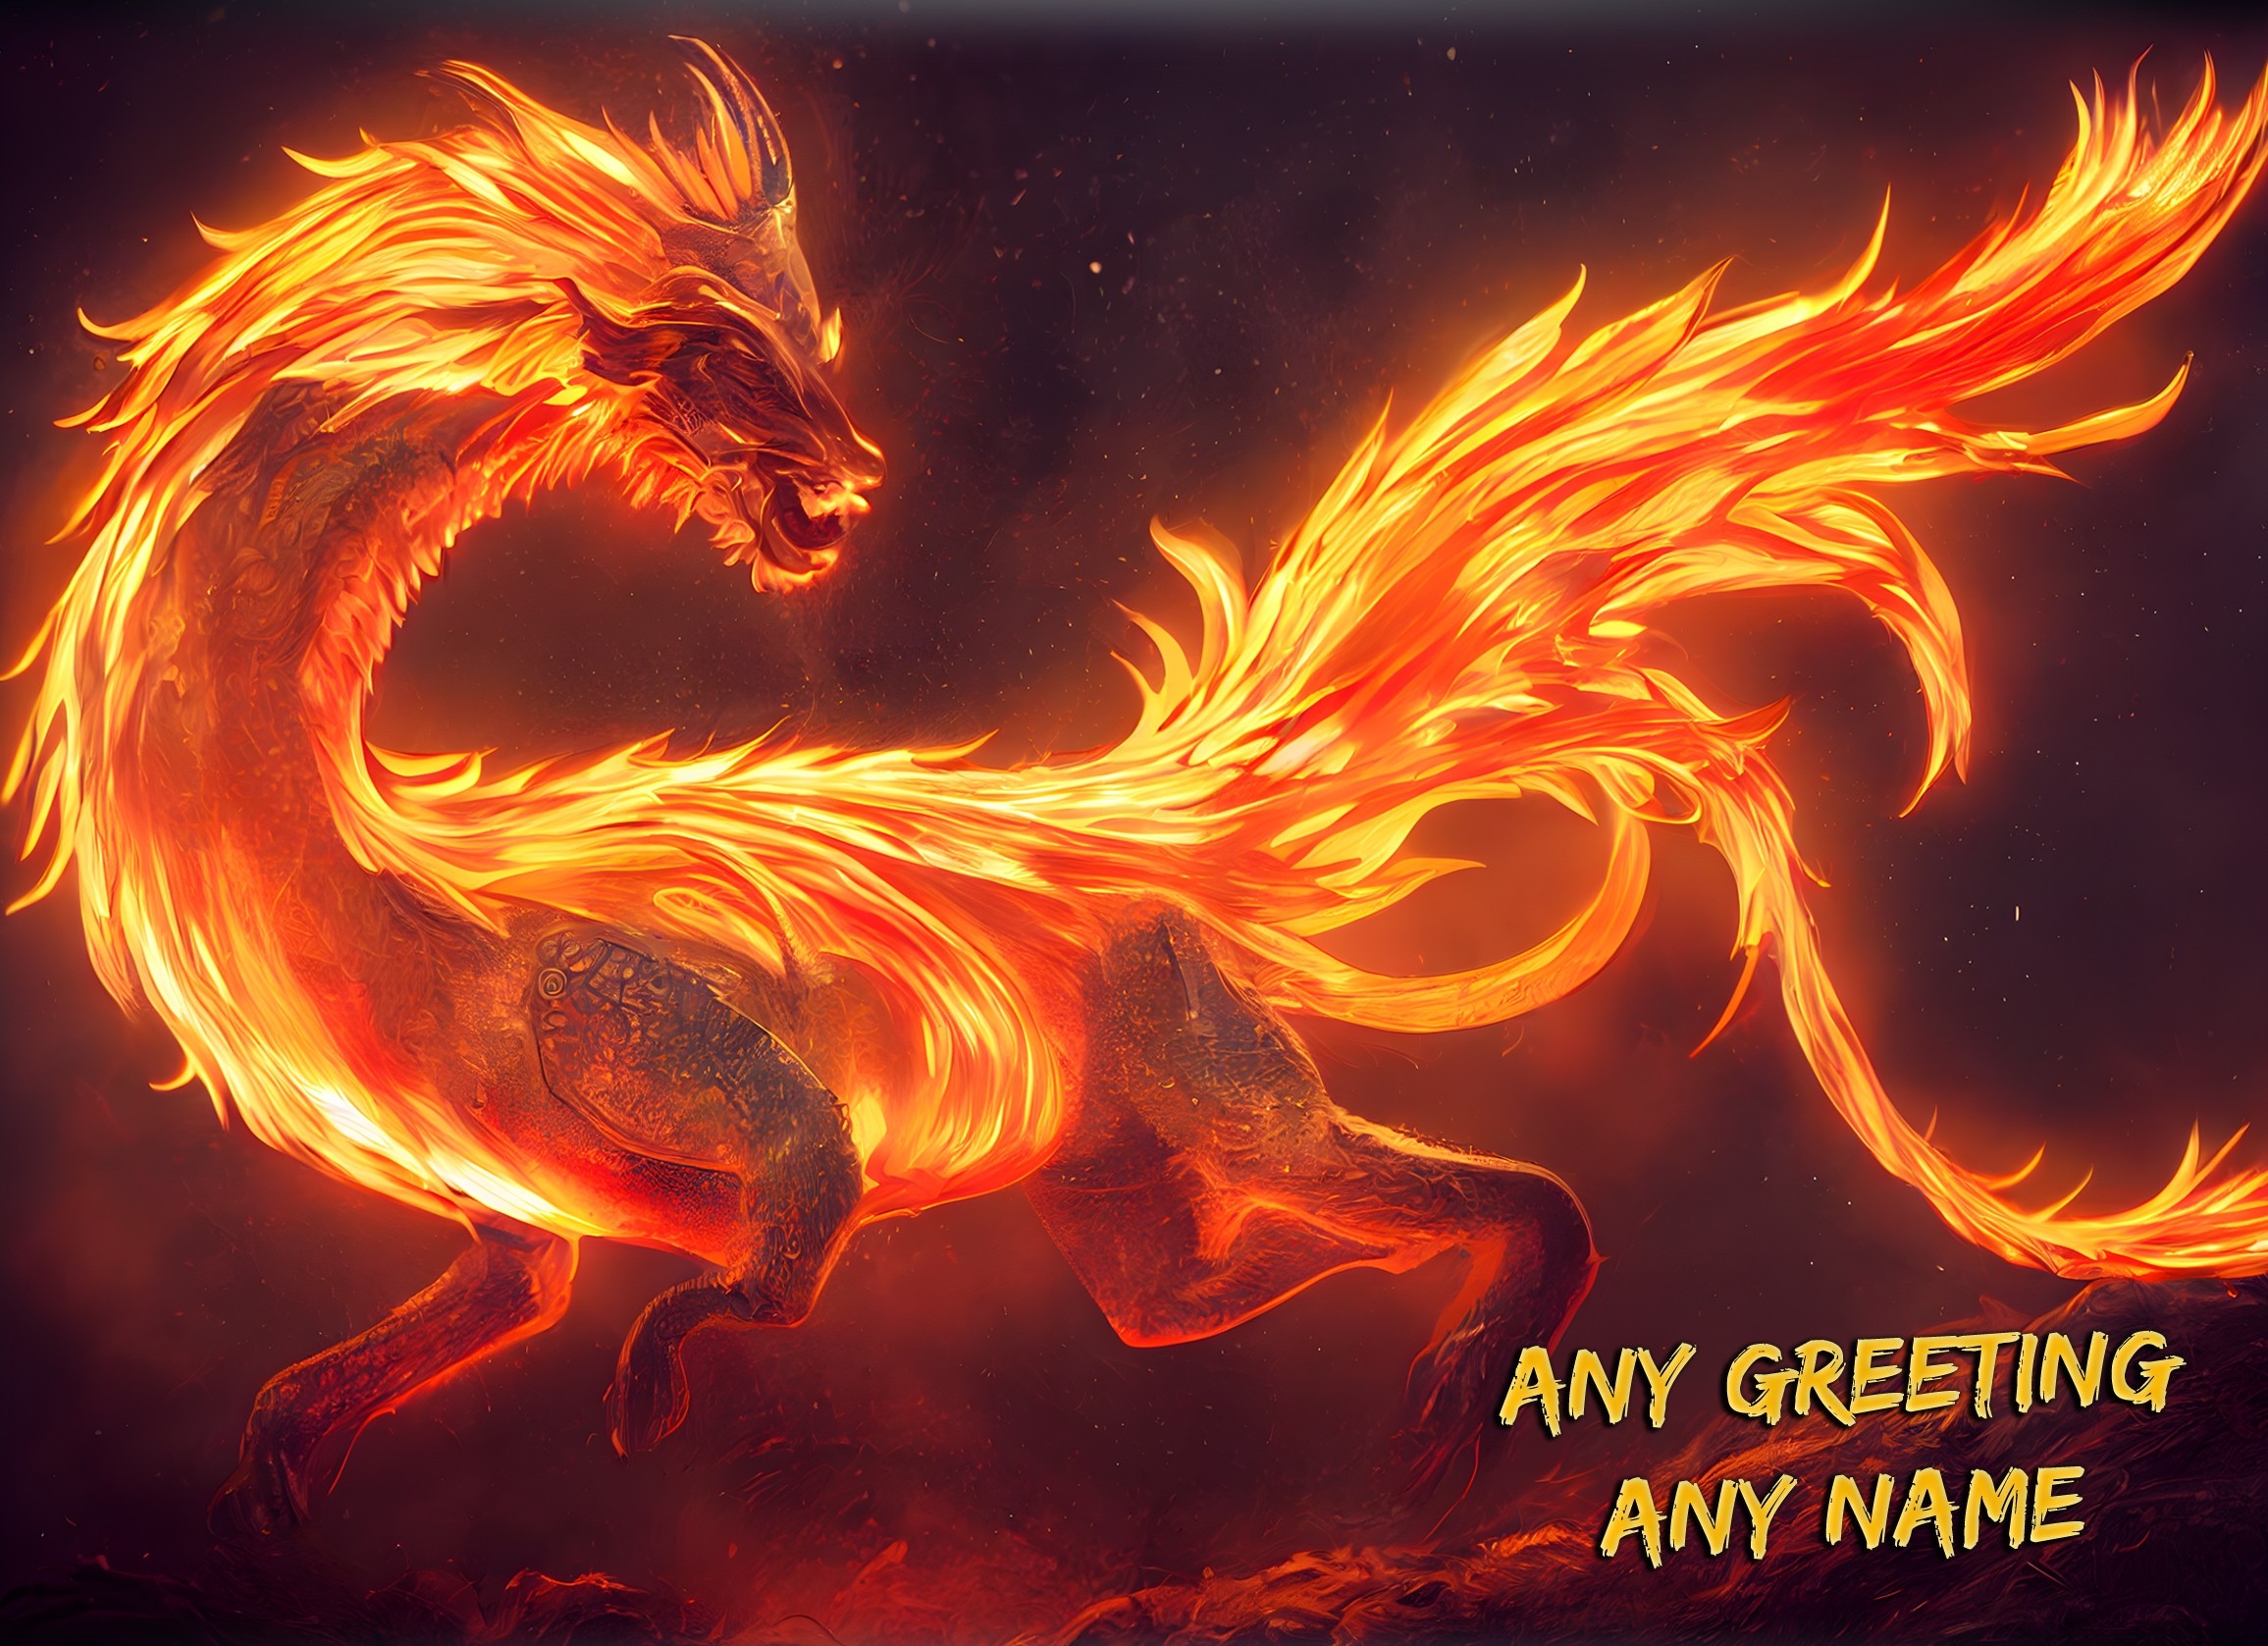 Personalised Fantasy Dragon Birthday Card (Orange)